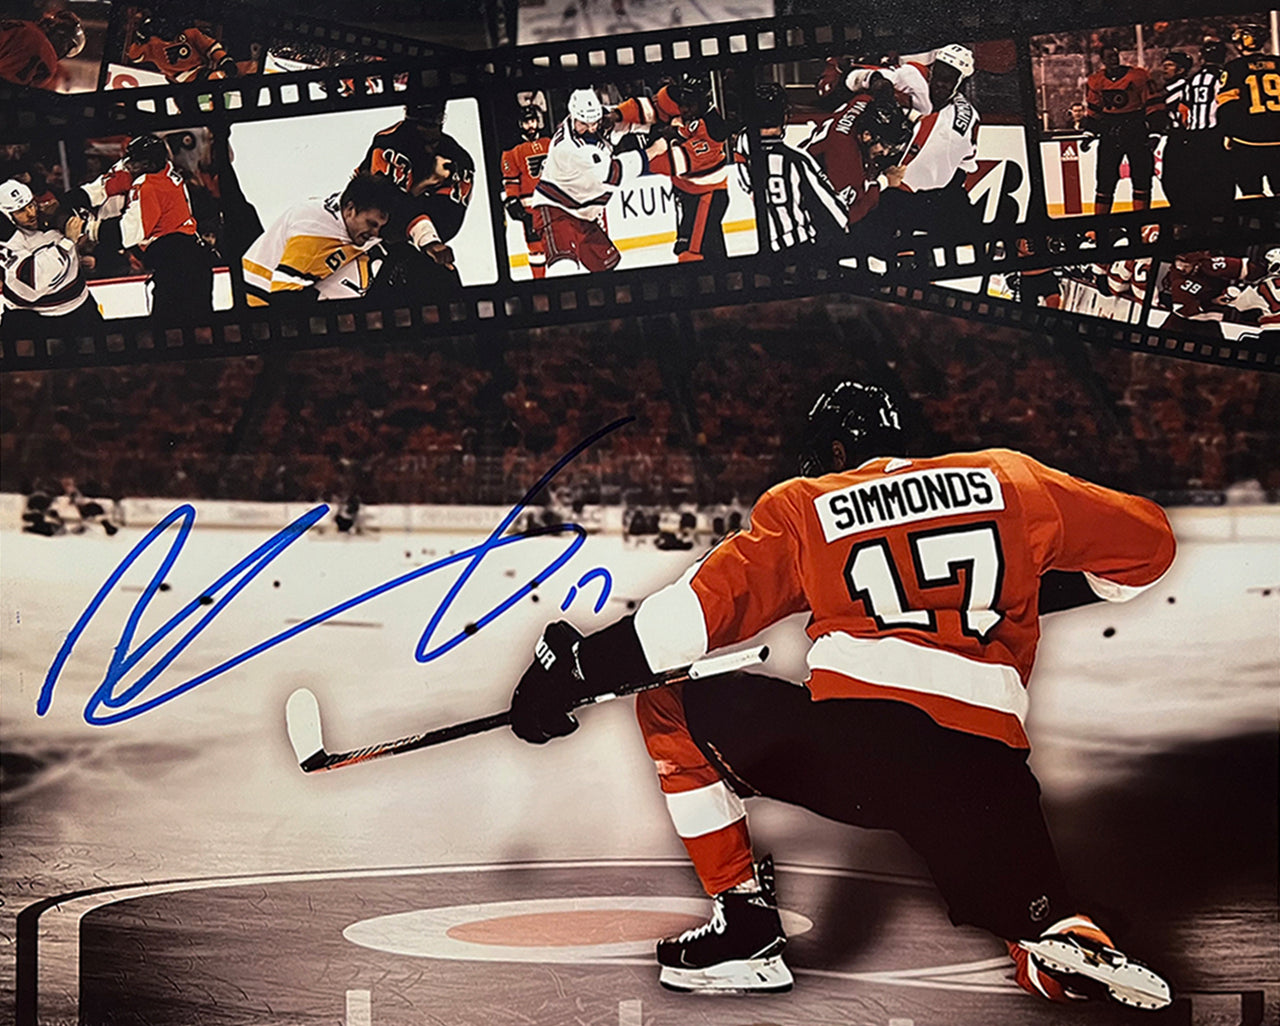 Wayne Simmonds Philadelphia Flyers Autographed 16" x 20" Collage Hockey Photo